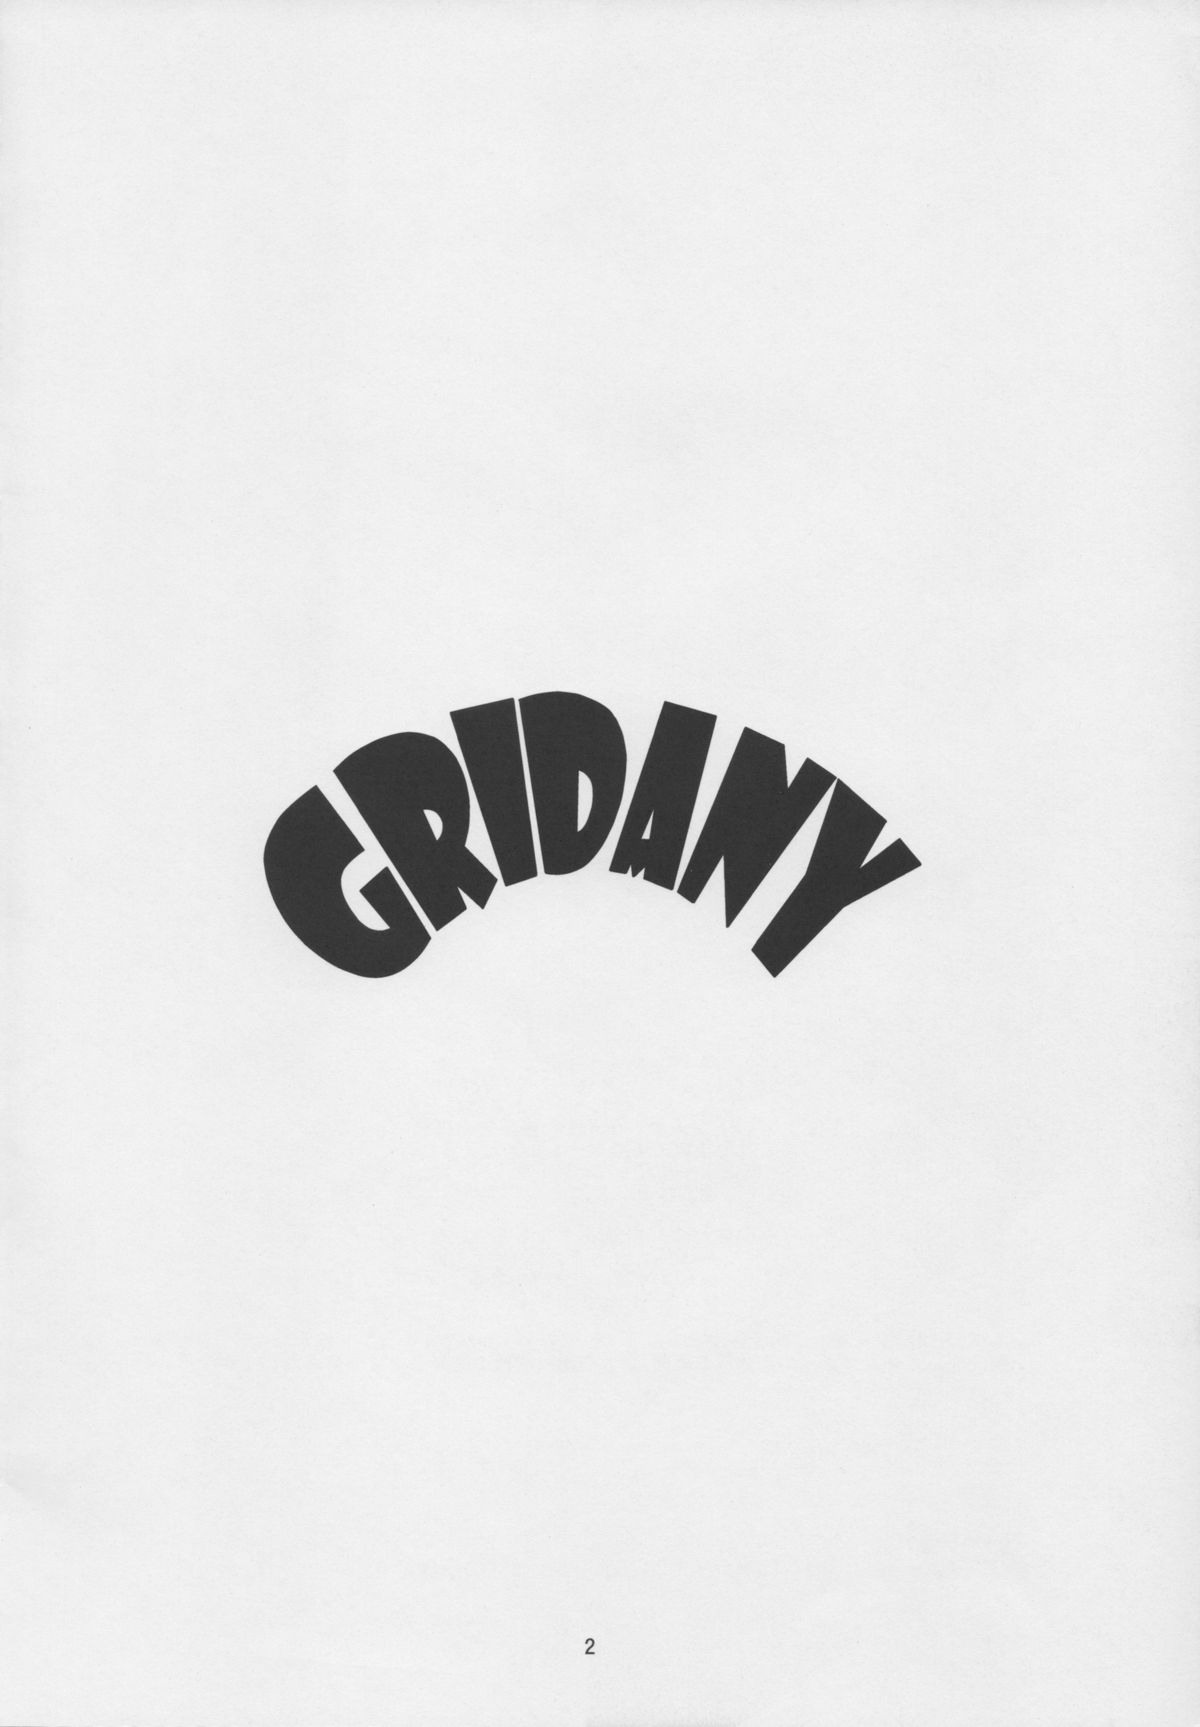 (C79) [MonkeyPinx. (Edih)] GRIDANY (ファイナルファンタジーXIV)